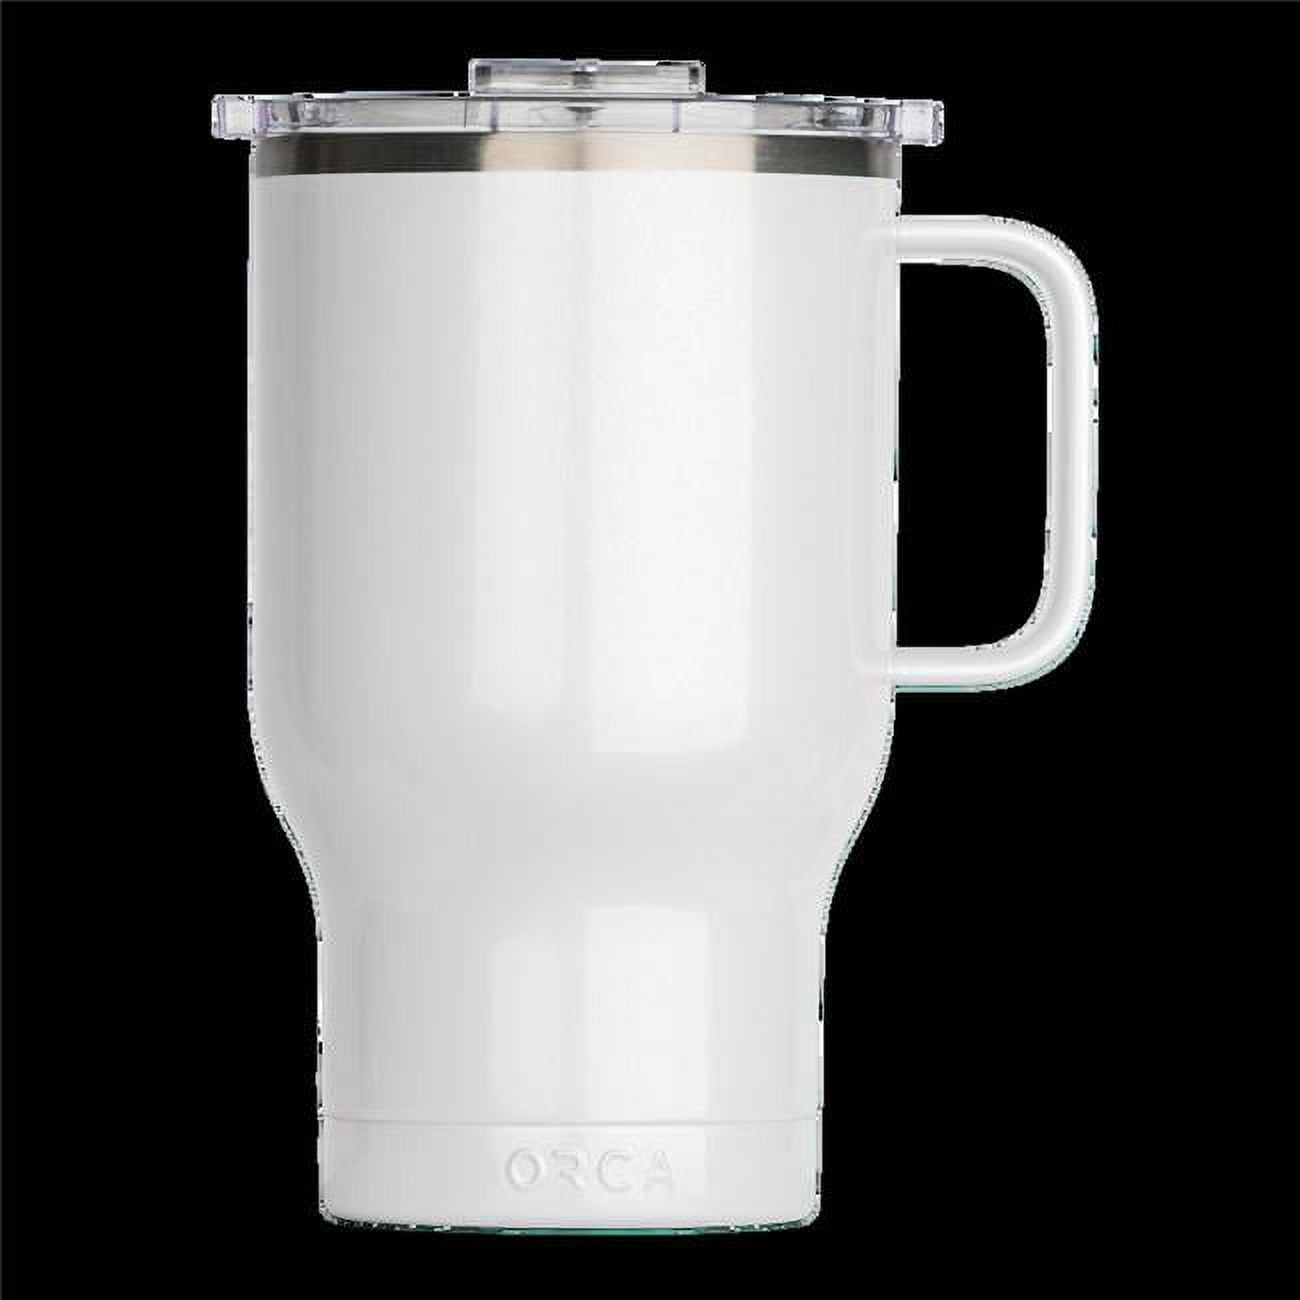 20 oz. Orca Stainless Steel Coffee Mug - White